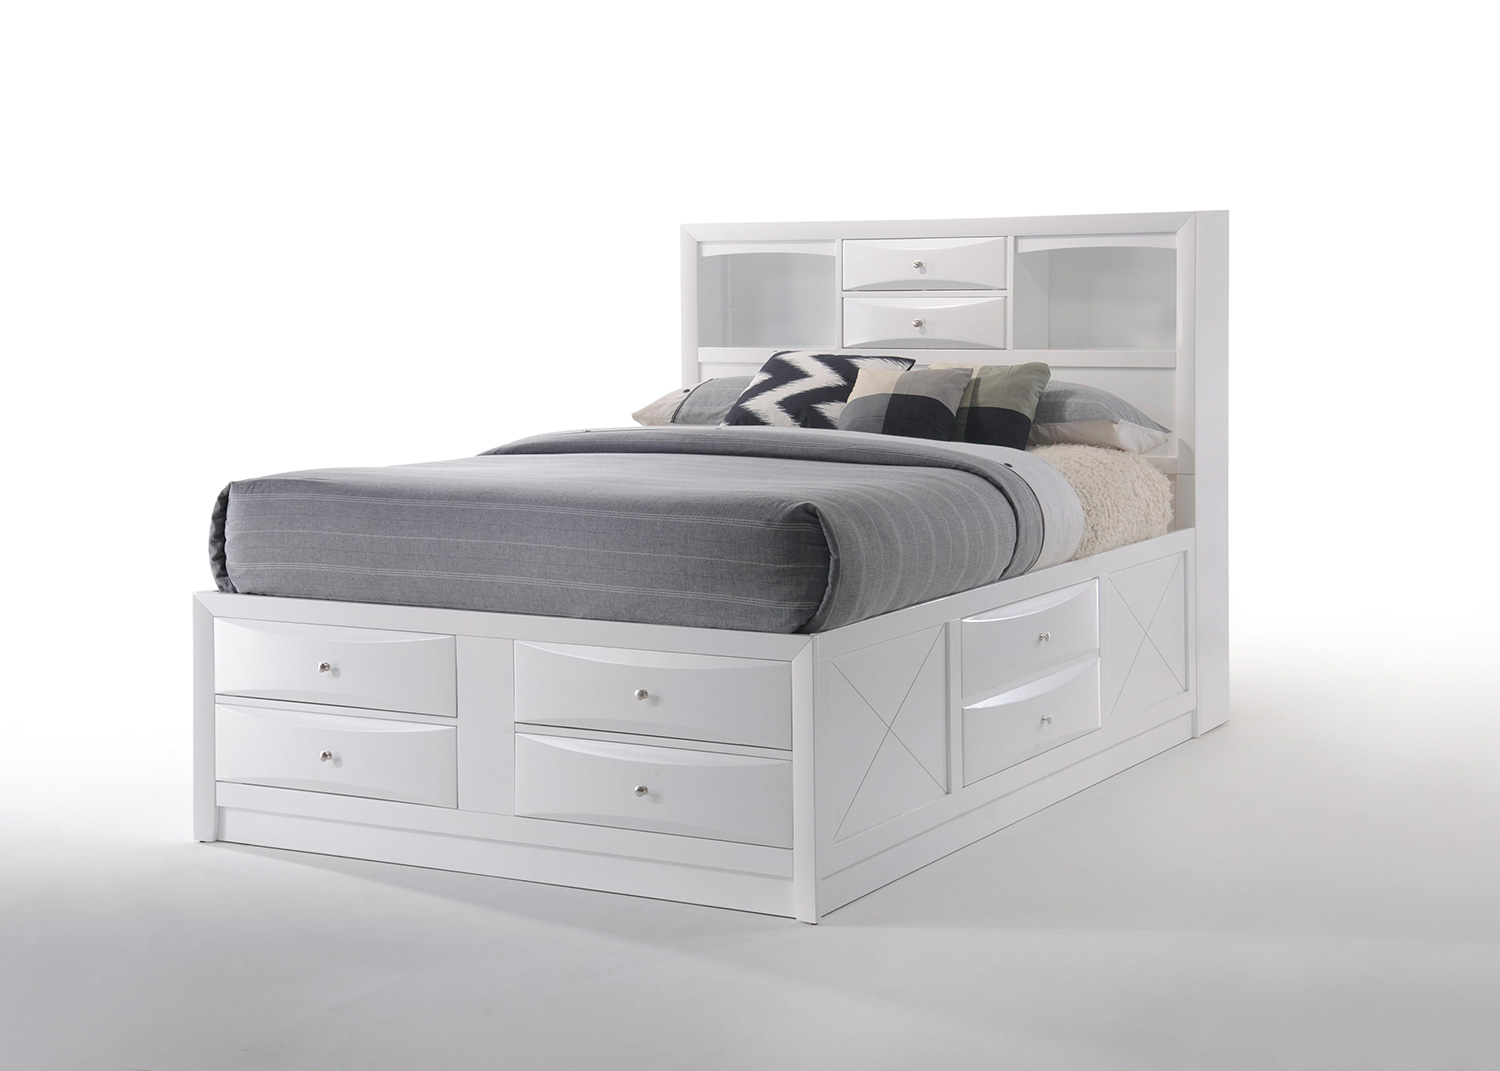 Acme Ireland Bed with Storage - White